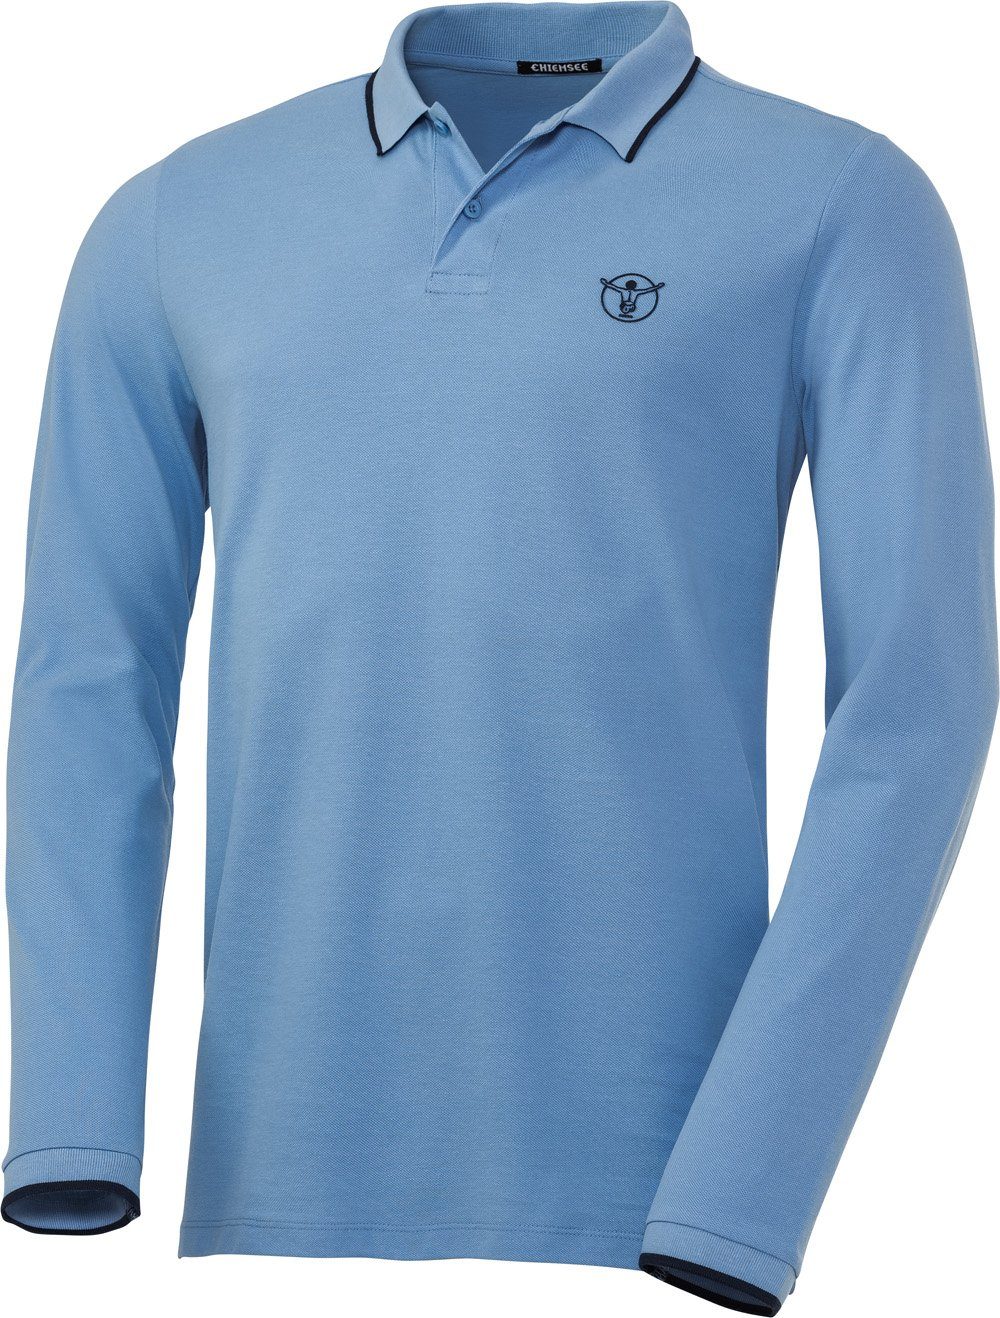 Chiemsee Langarm-Poloshirt Baumwoll-Piqué hellblau aus formstabilem